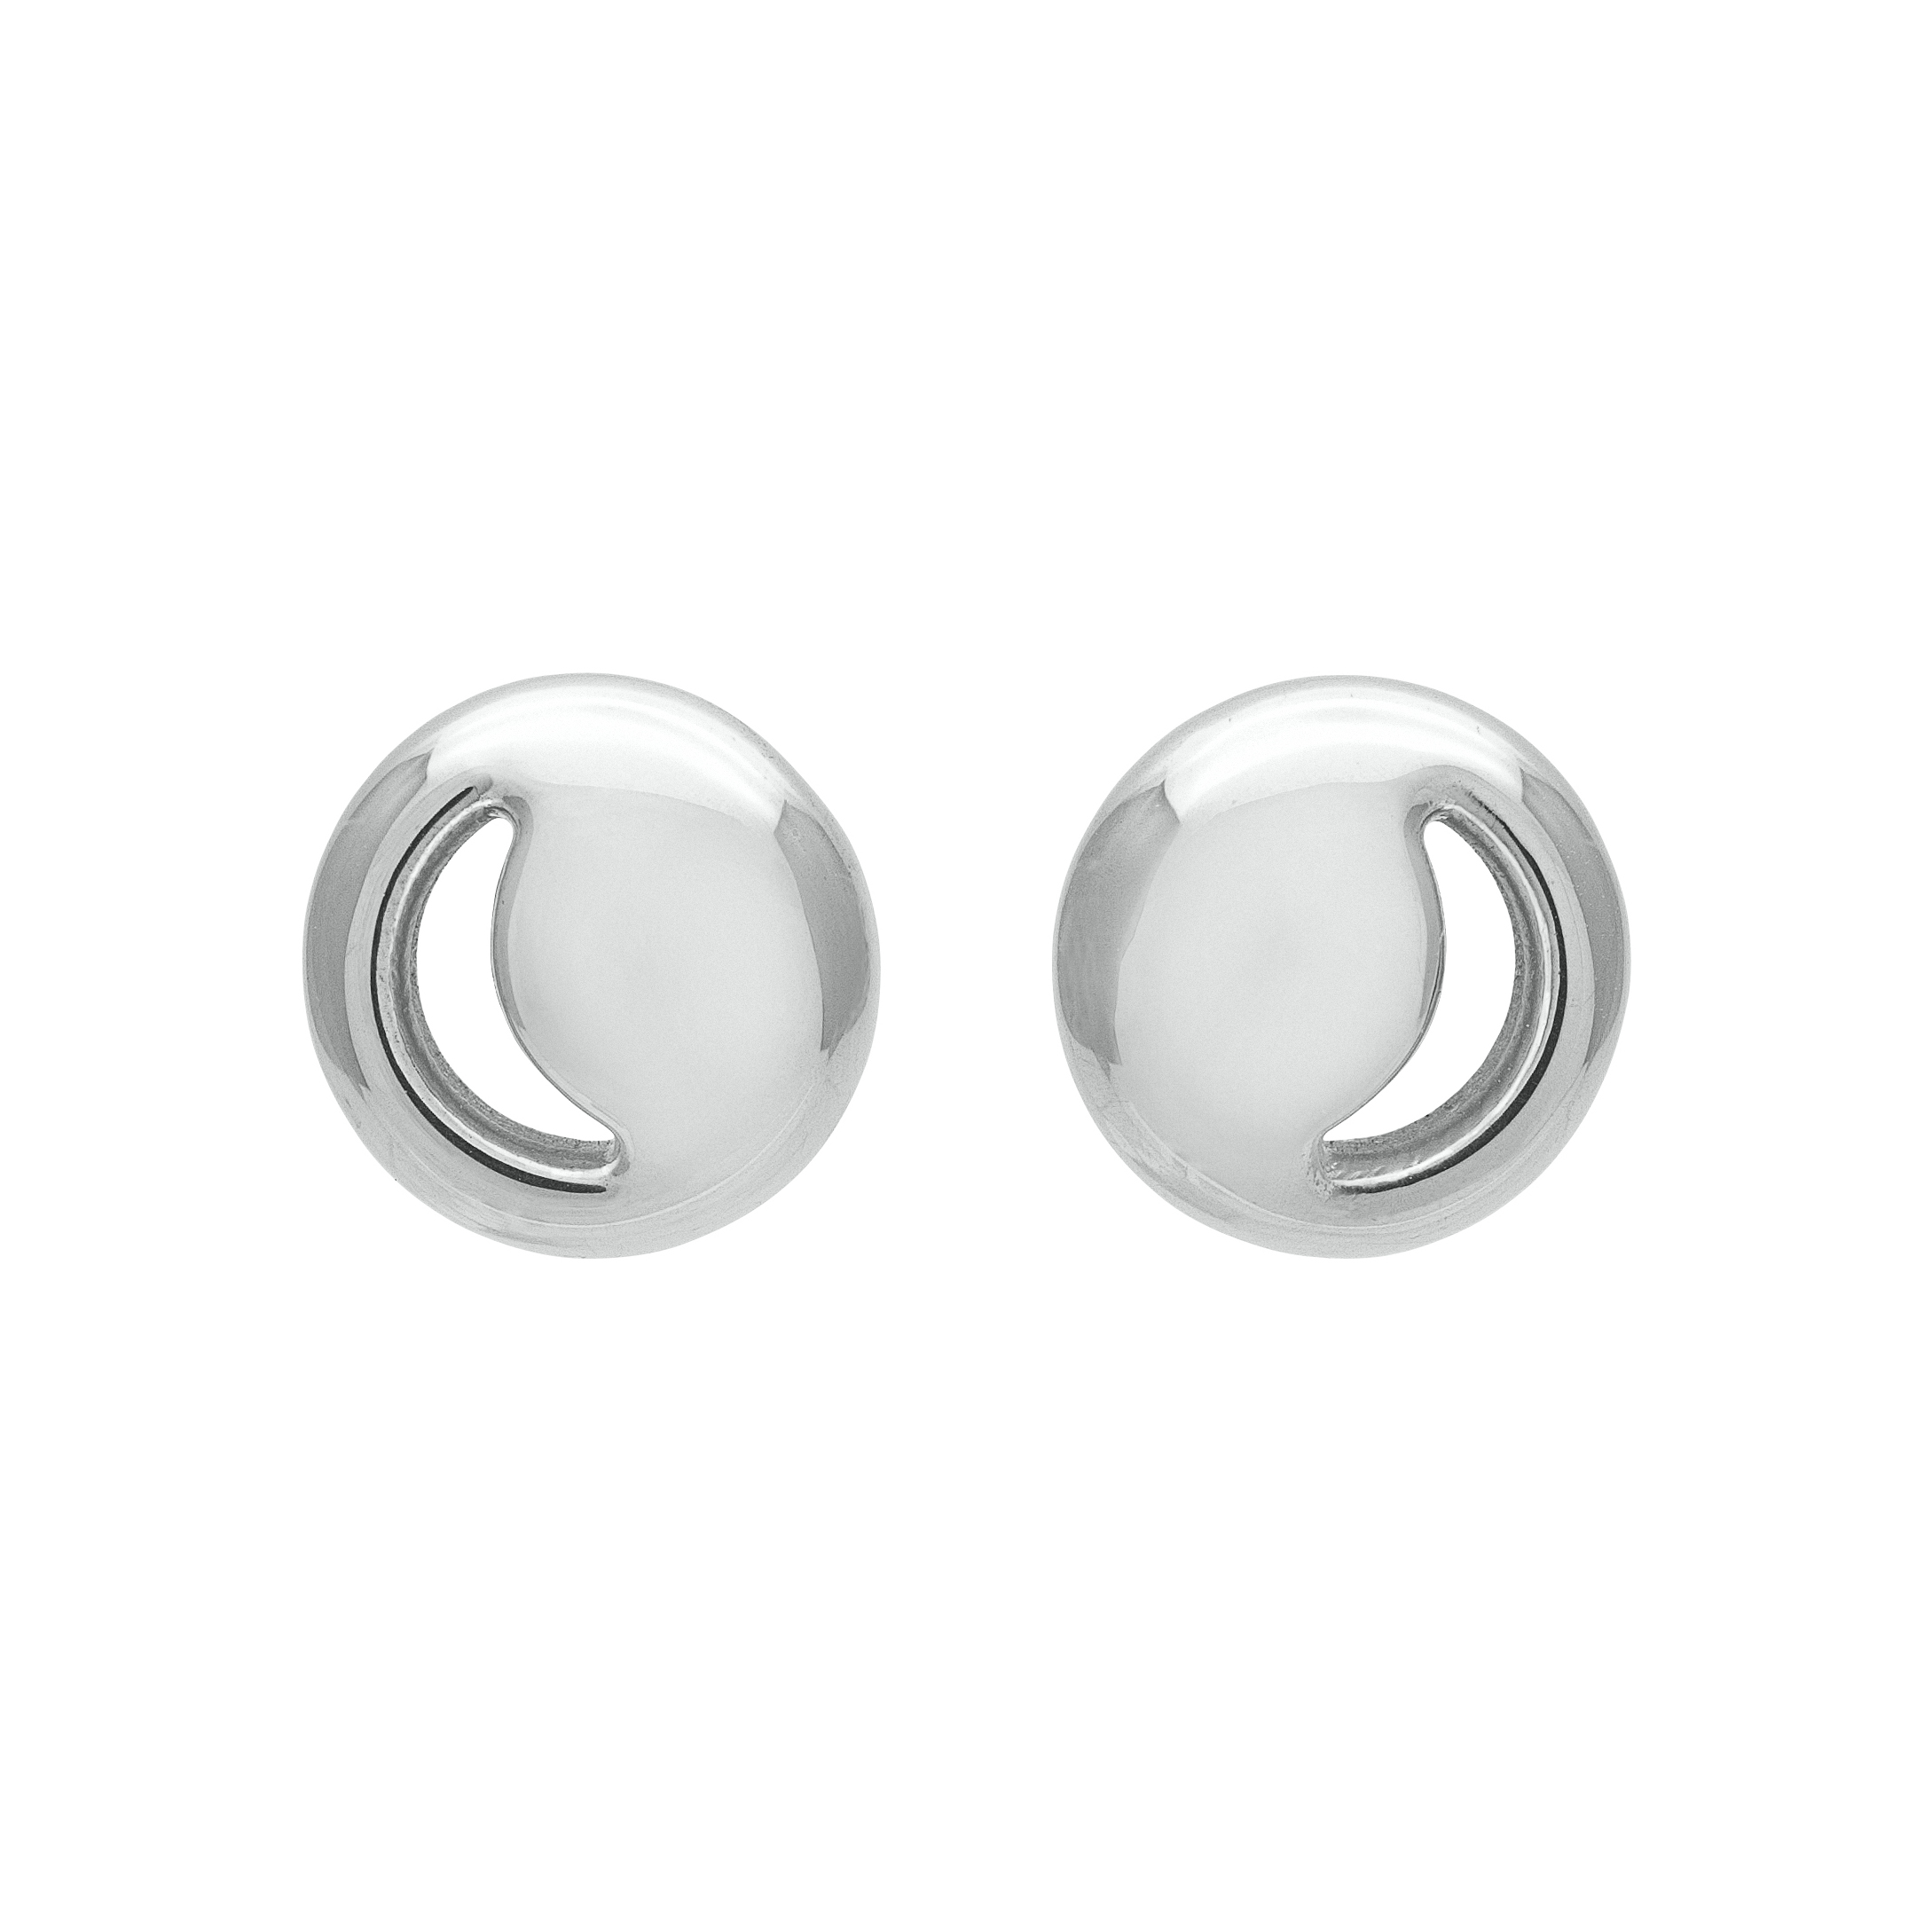 Lunar Crescent Earrings